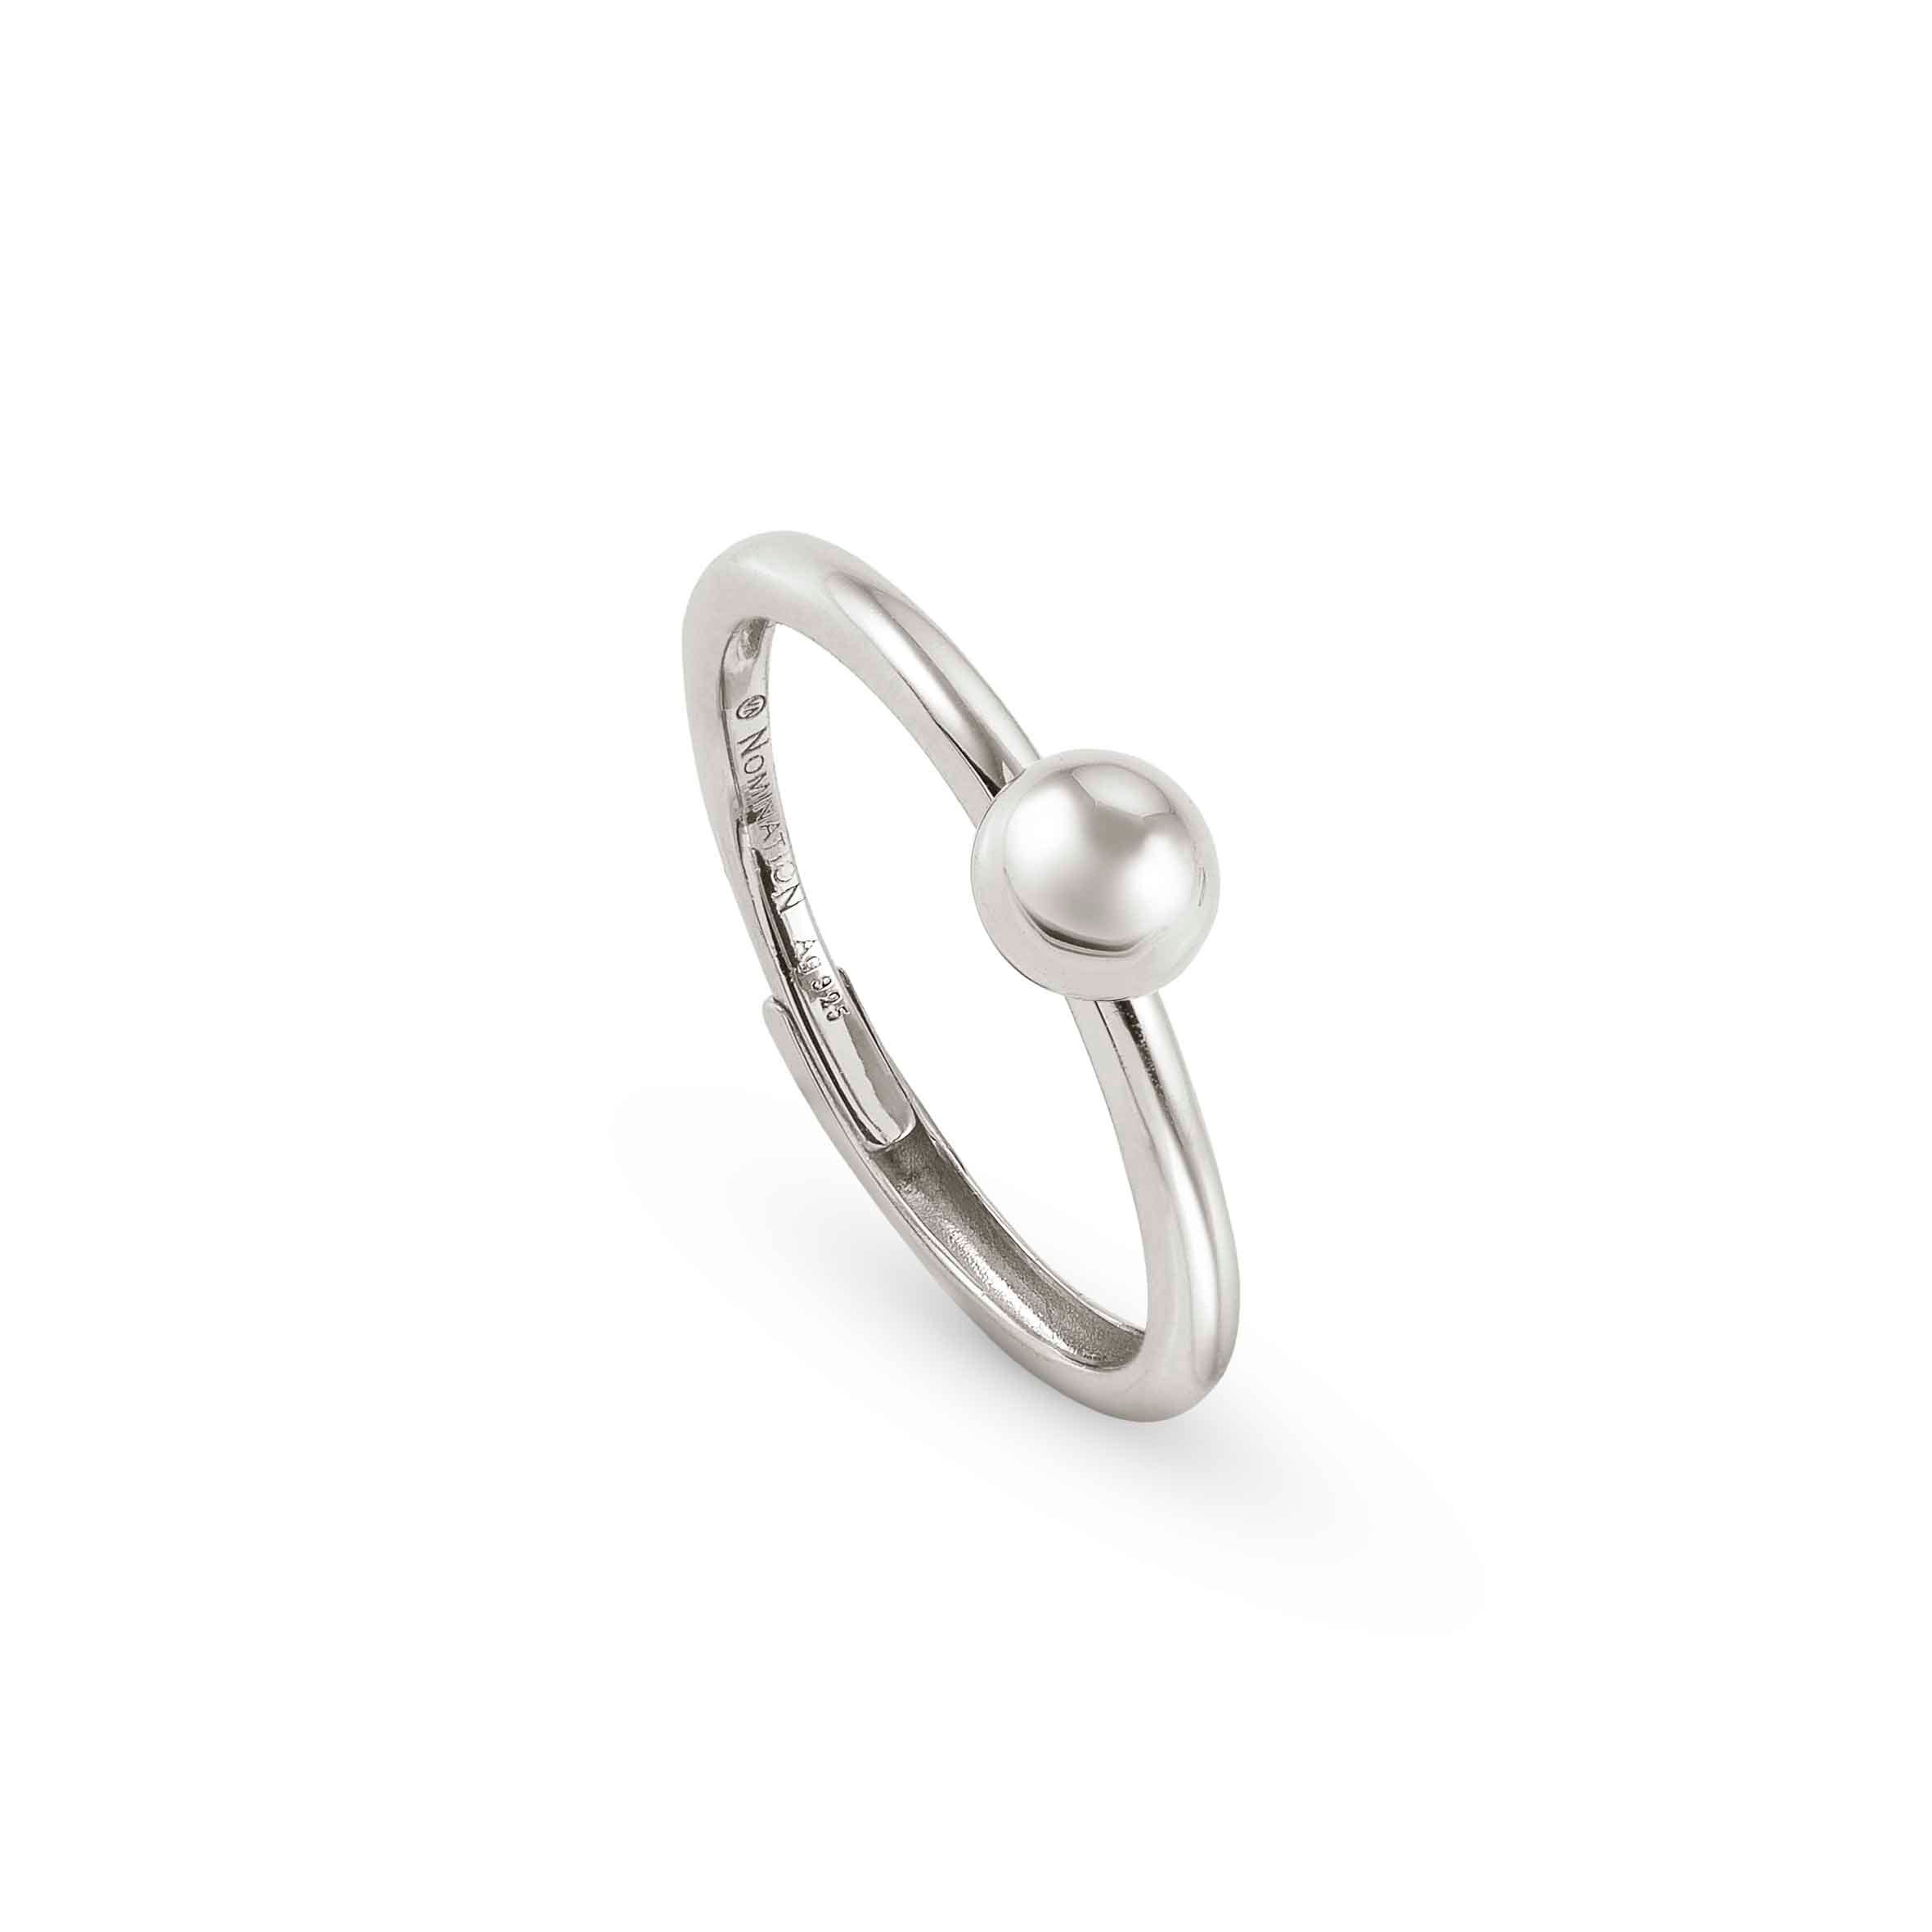 Custom design 925 silve ring vermeil rhodium plated jewelry